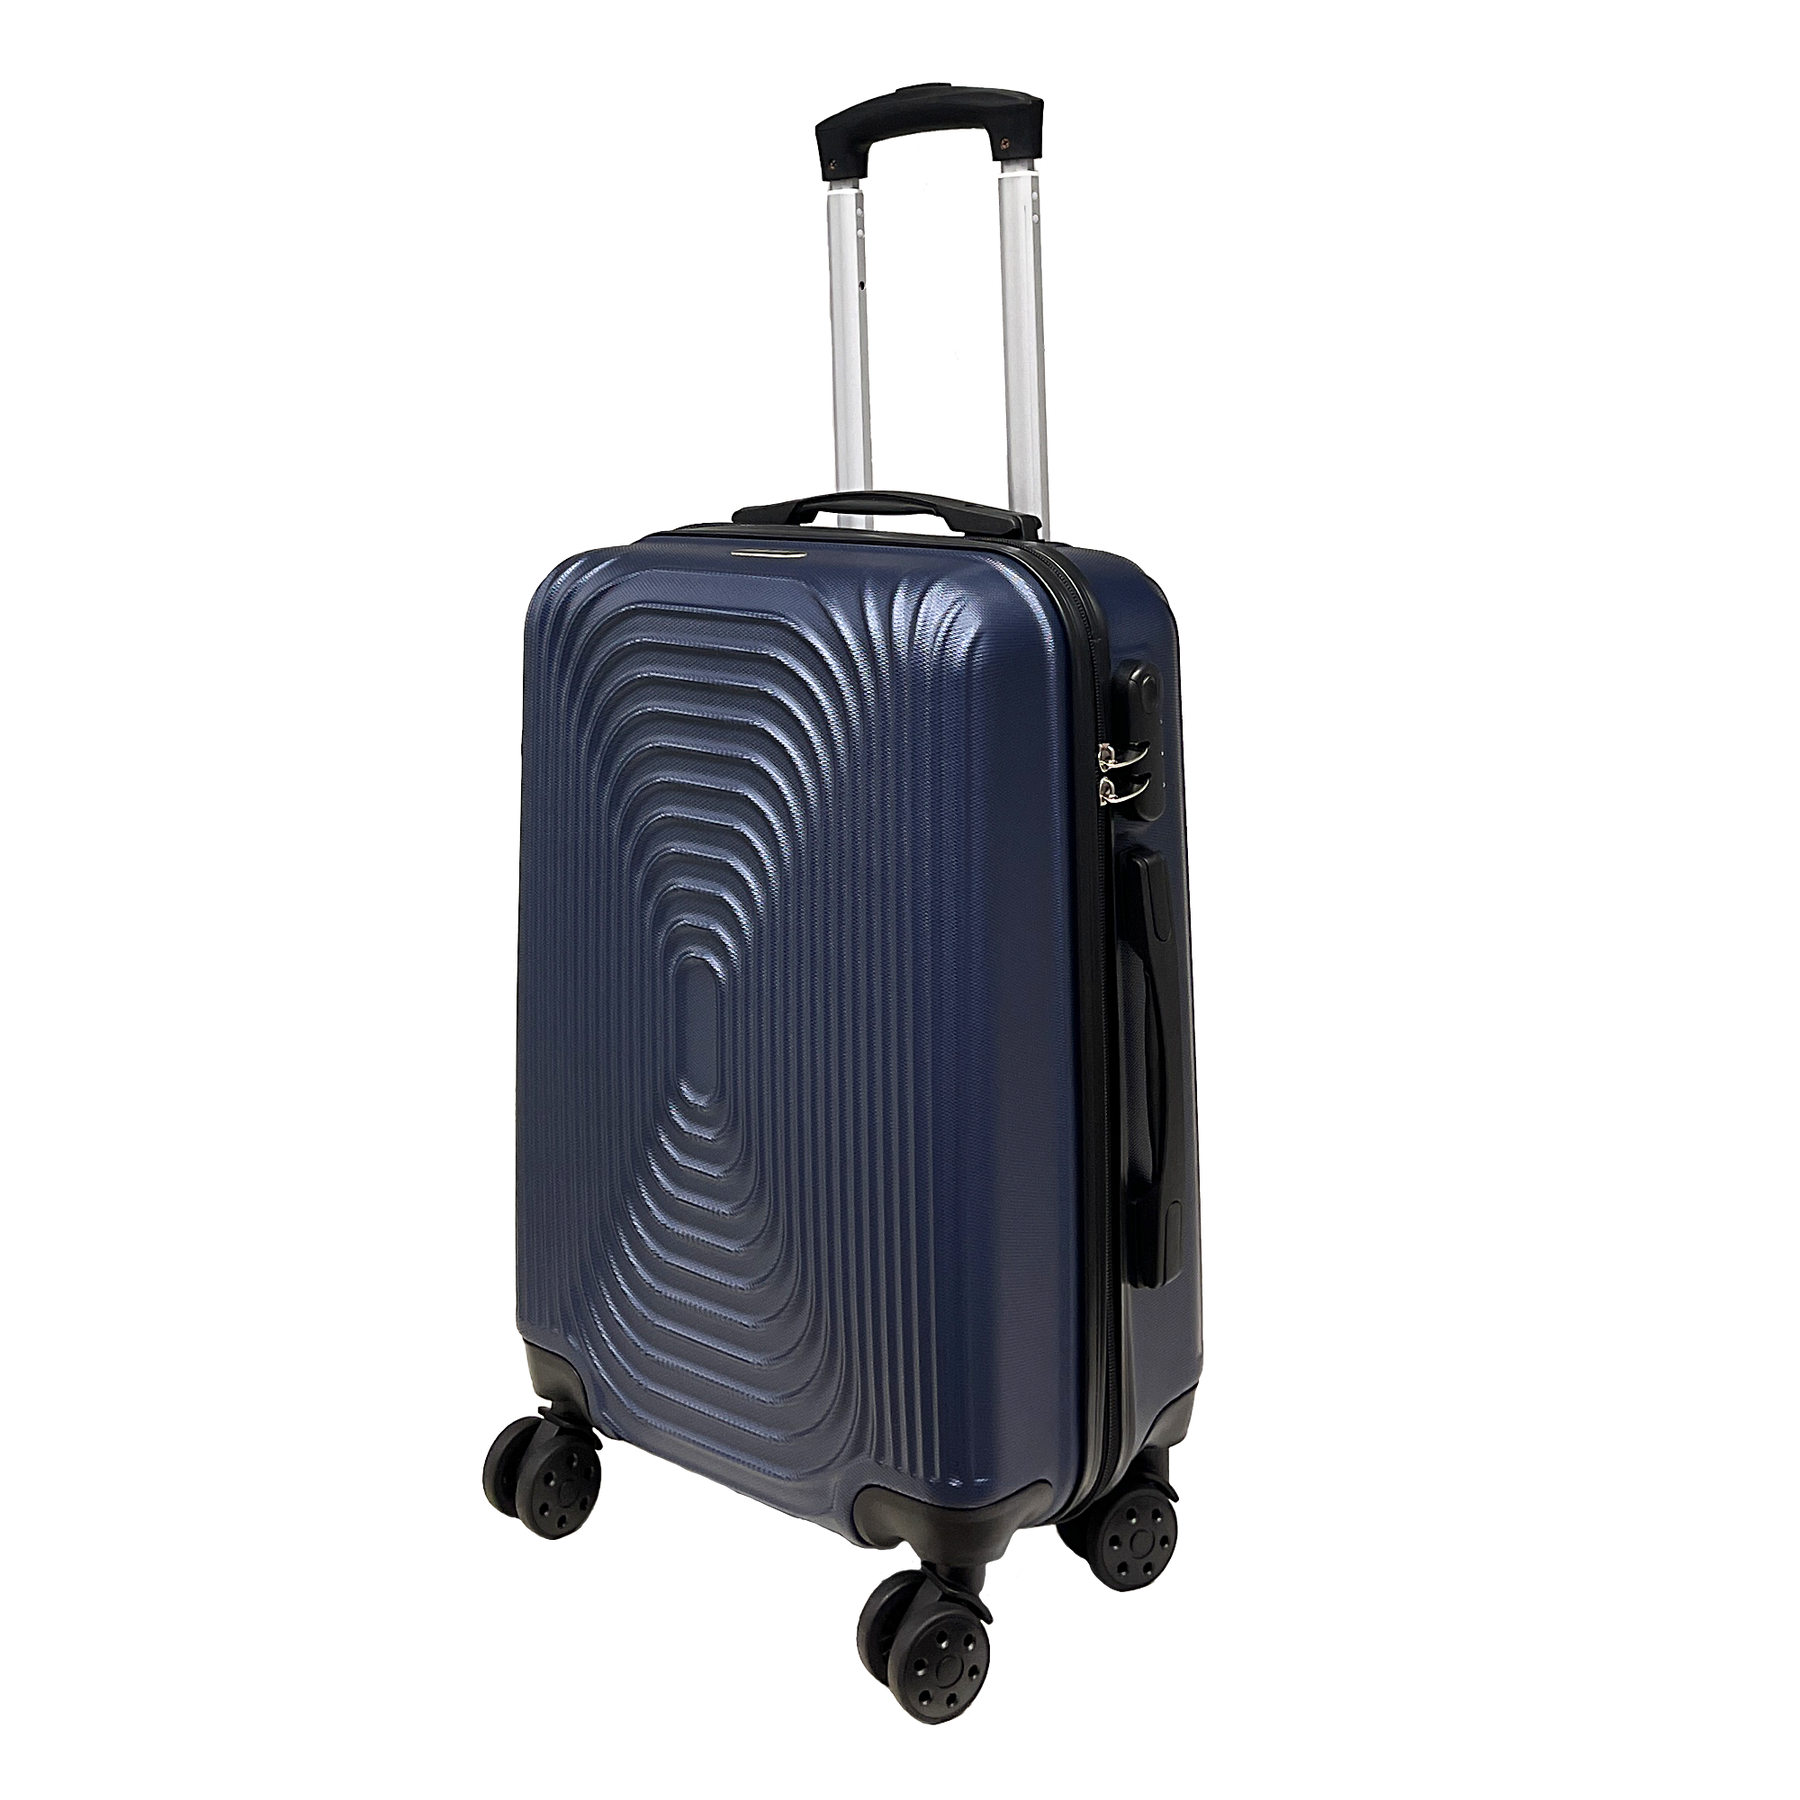 Velika ostra prtljaga trma prtljaga 55x37x222cm Ultra Light v ABS - držite prtljago